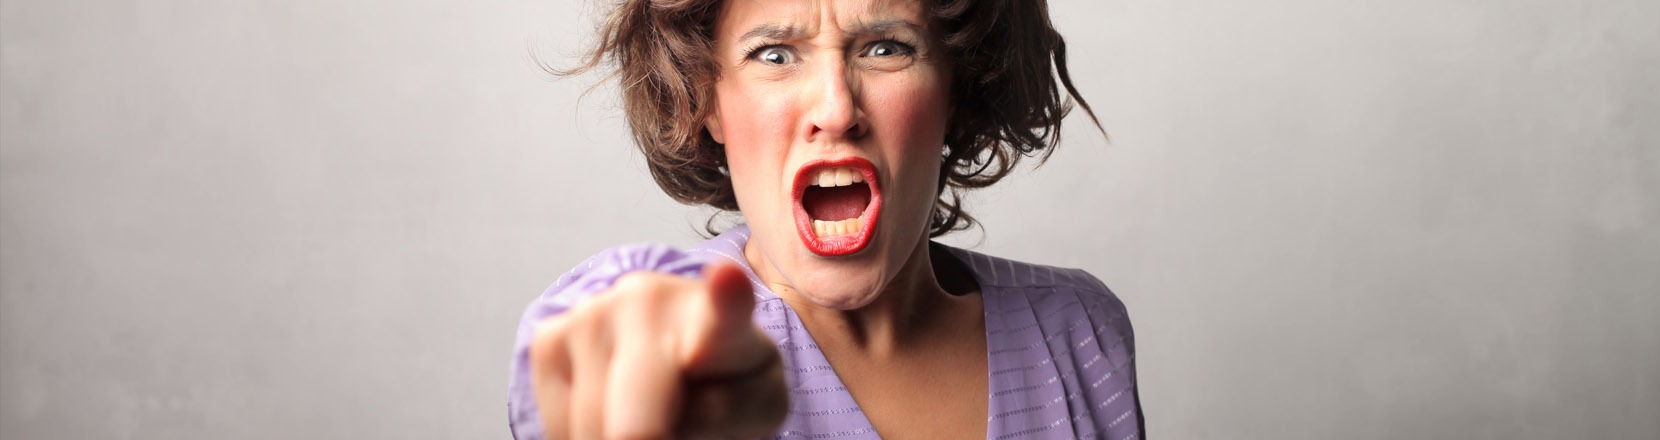 Lockdown: mamma arrabbiata, nervosa, impaziente, irritabile che urla, sgrida e punisce